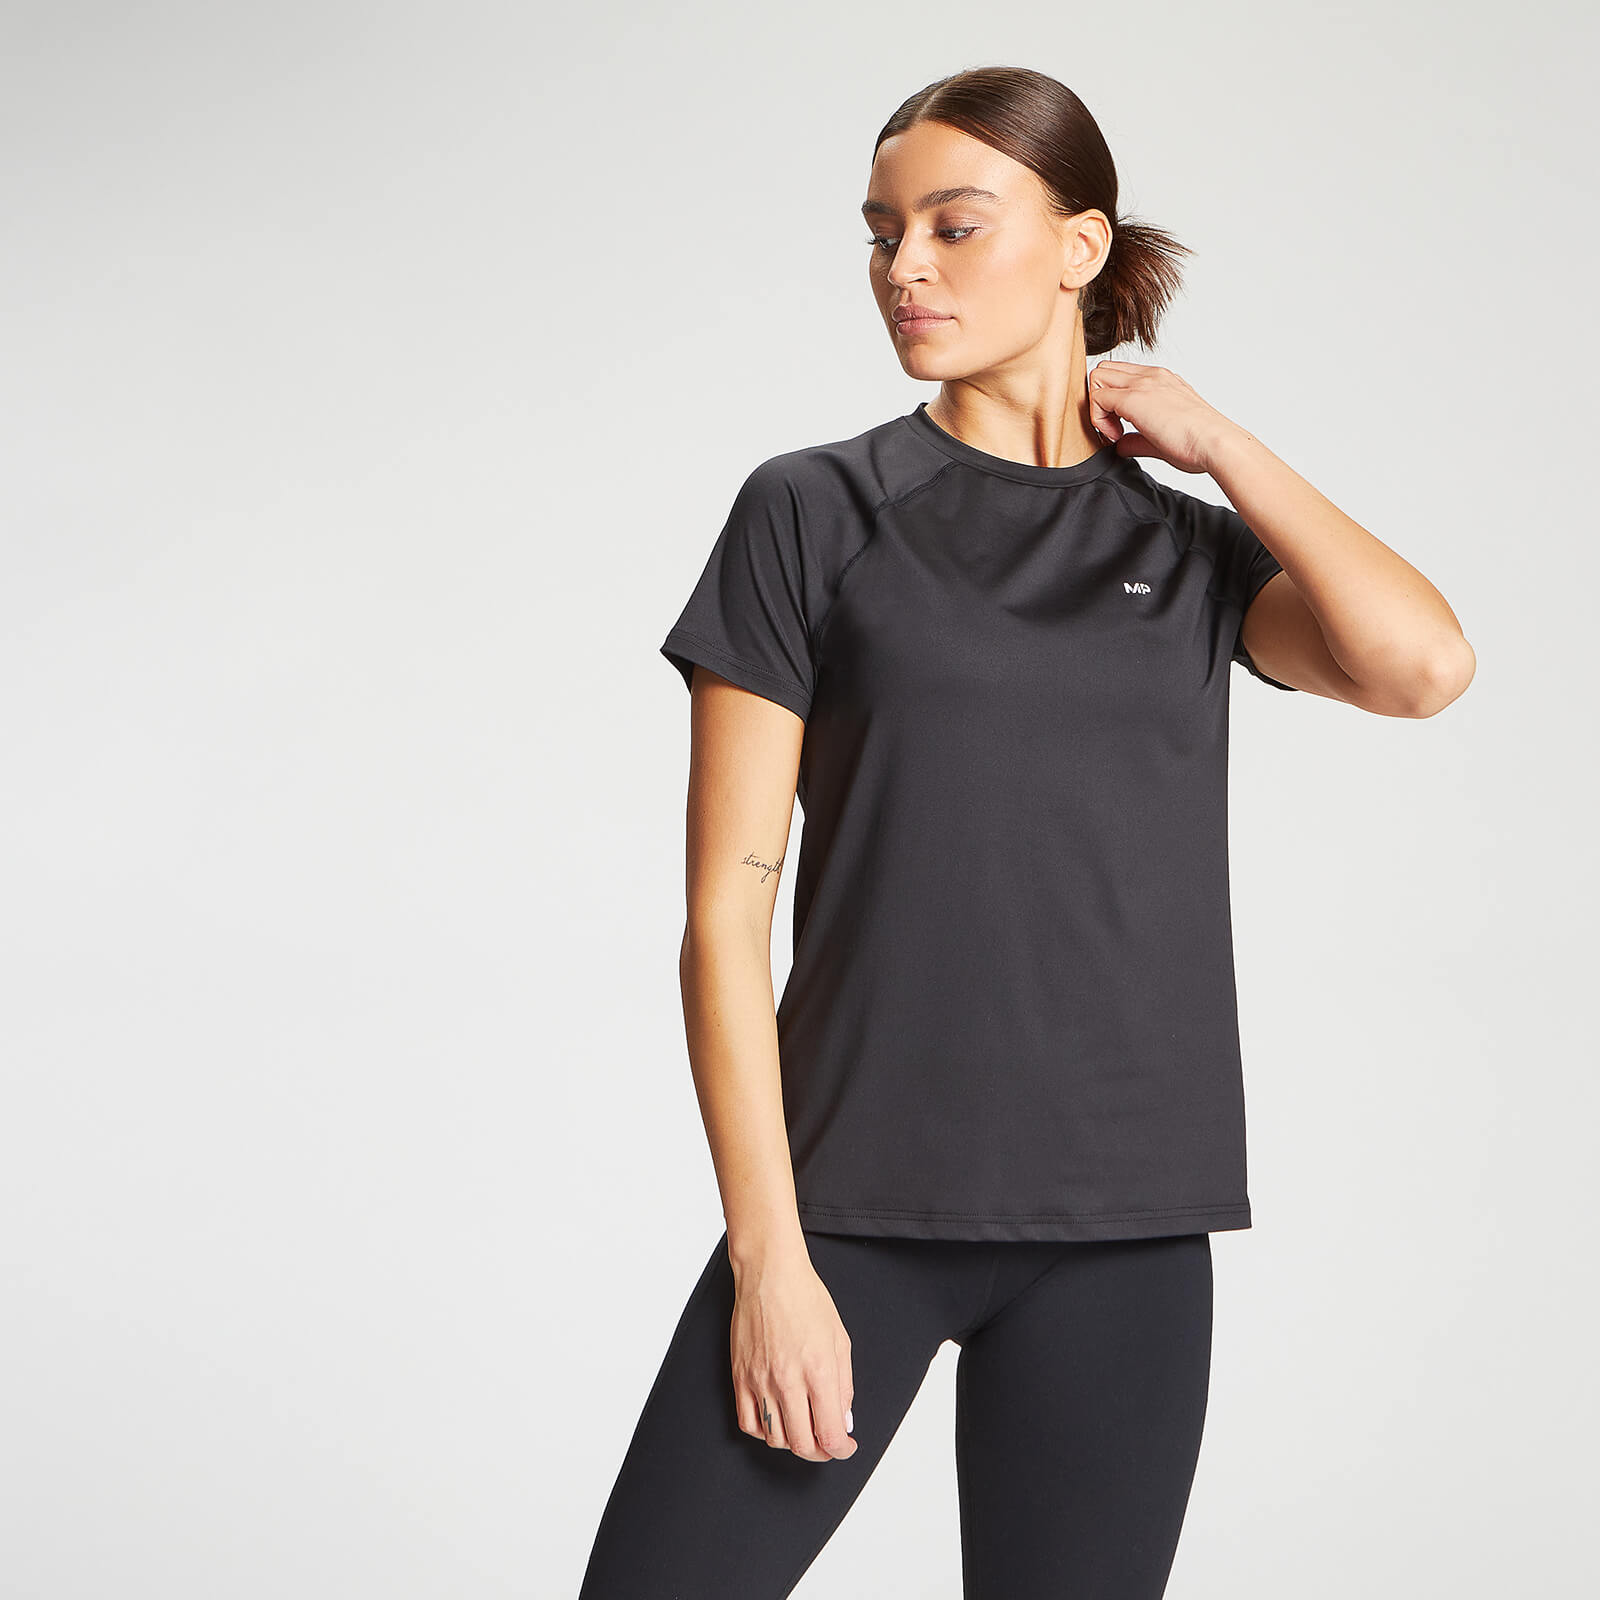 Essentials Training 基礎訓練系列 女士合身短袖上衣 - 黑色 - XXS